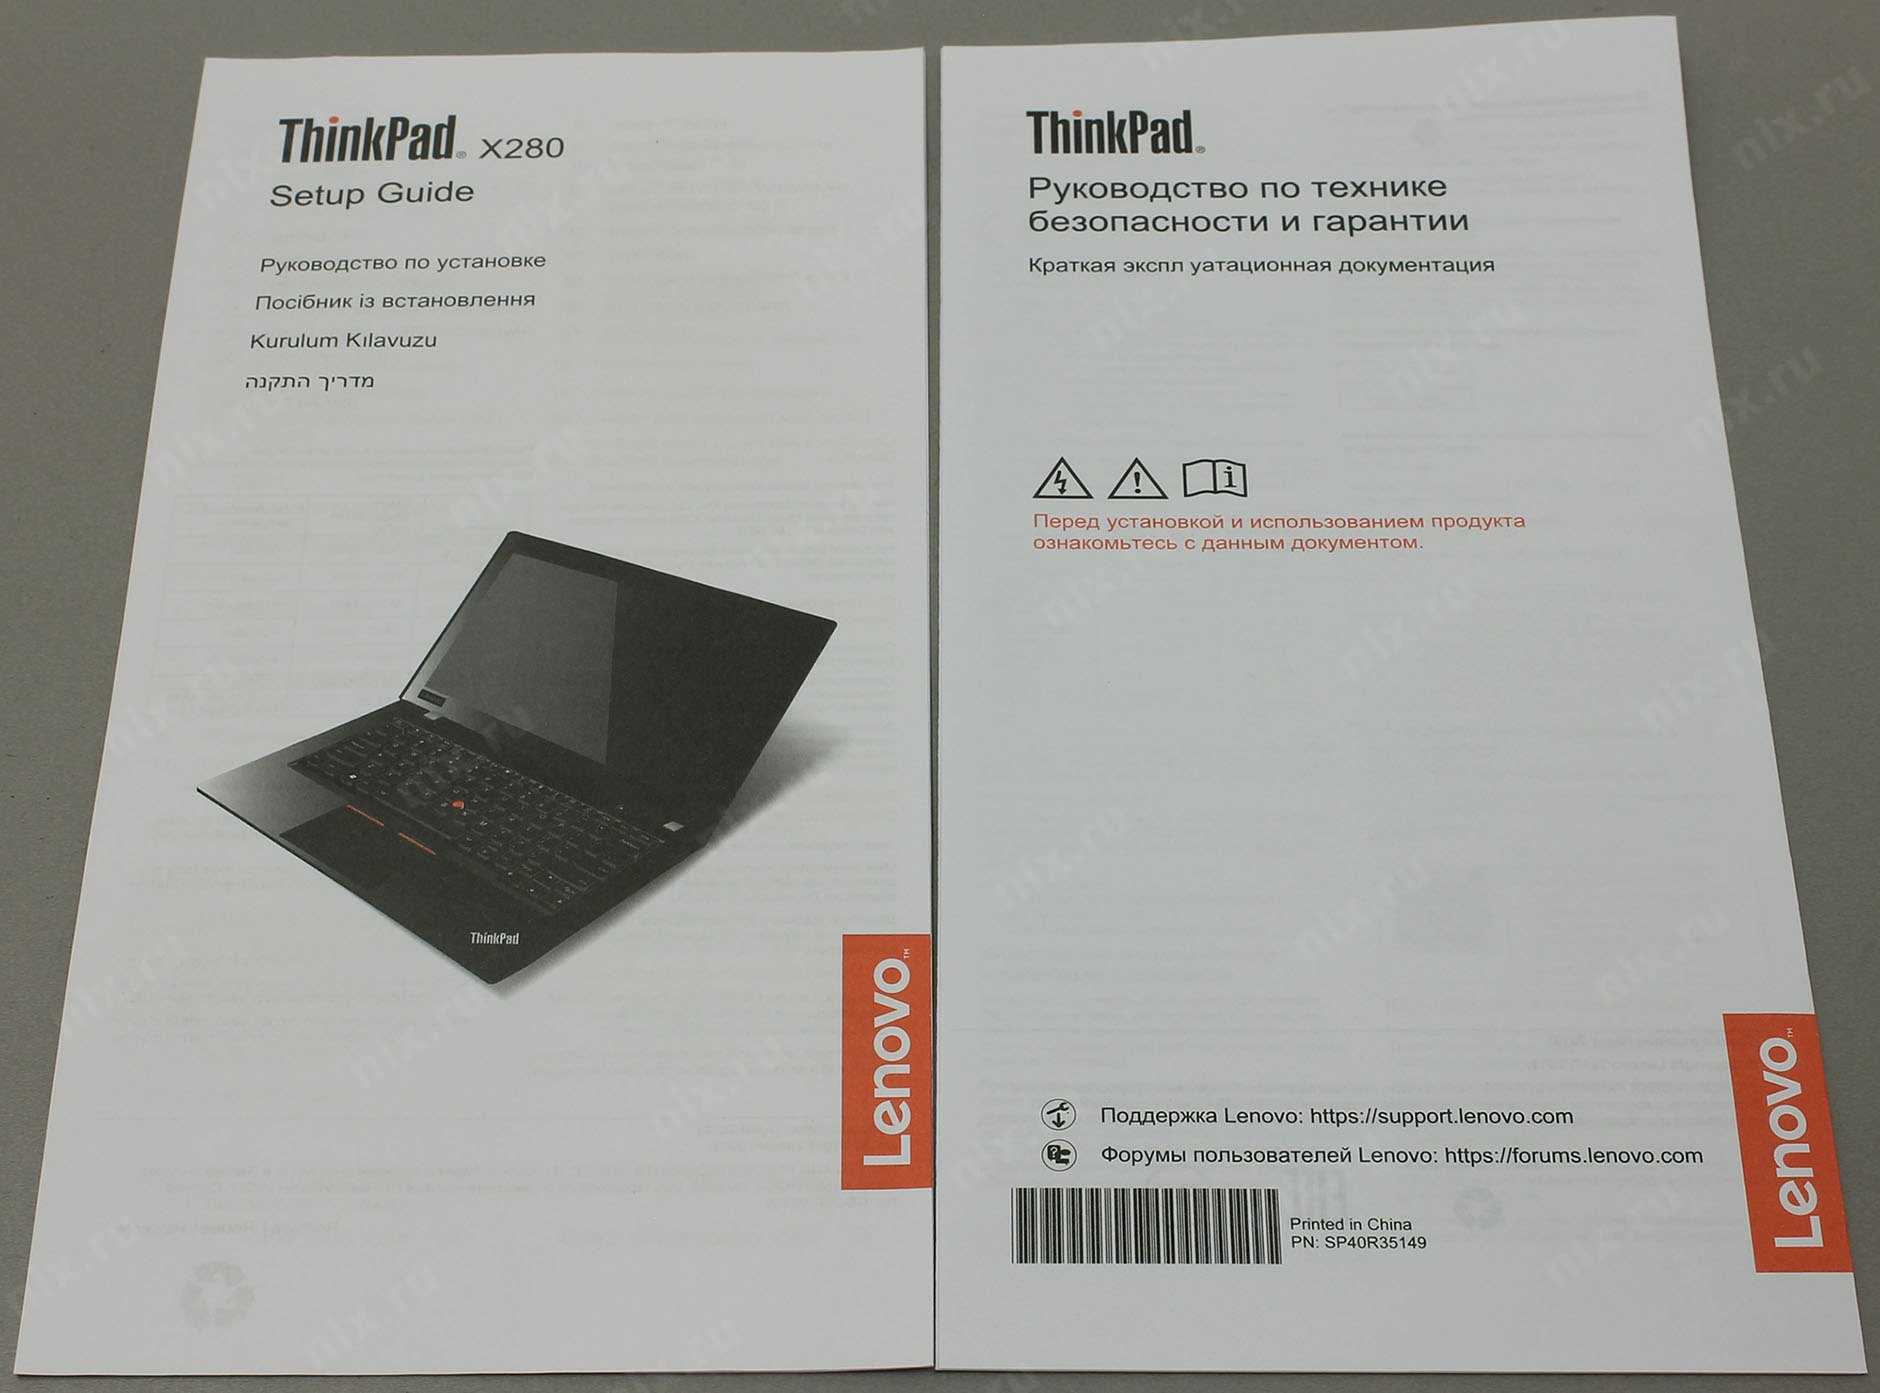 Ноутбук lenovo thinkpad x280 (20kf001rrt) — купить, цена и характеристики, отзывы